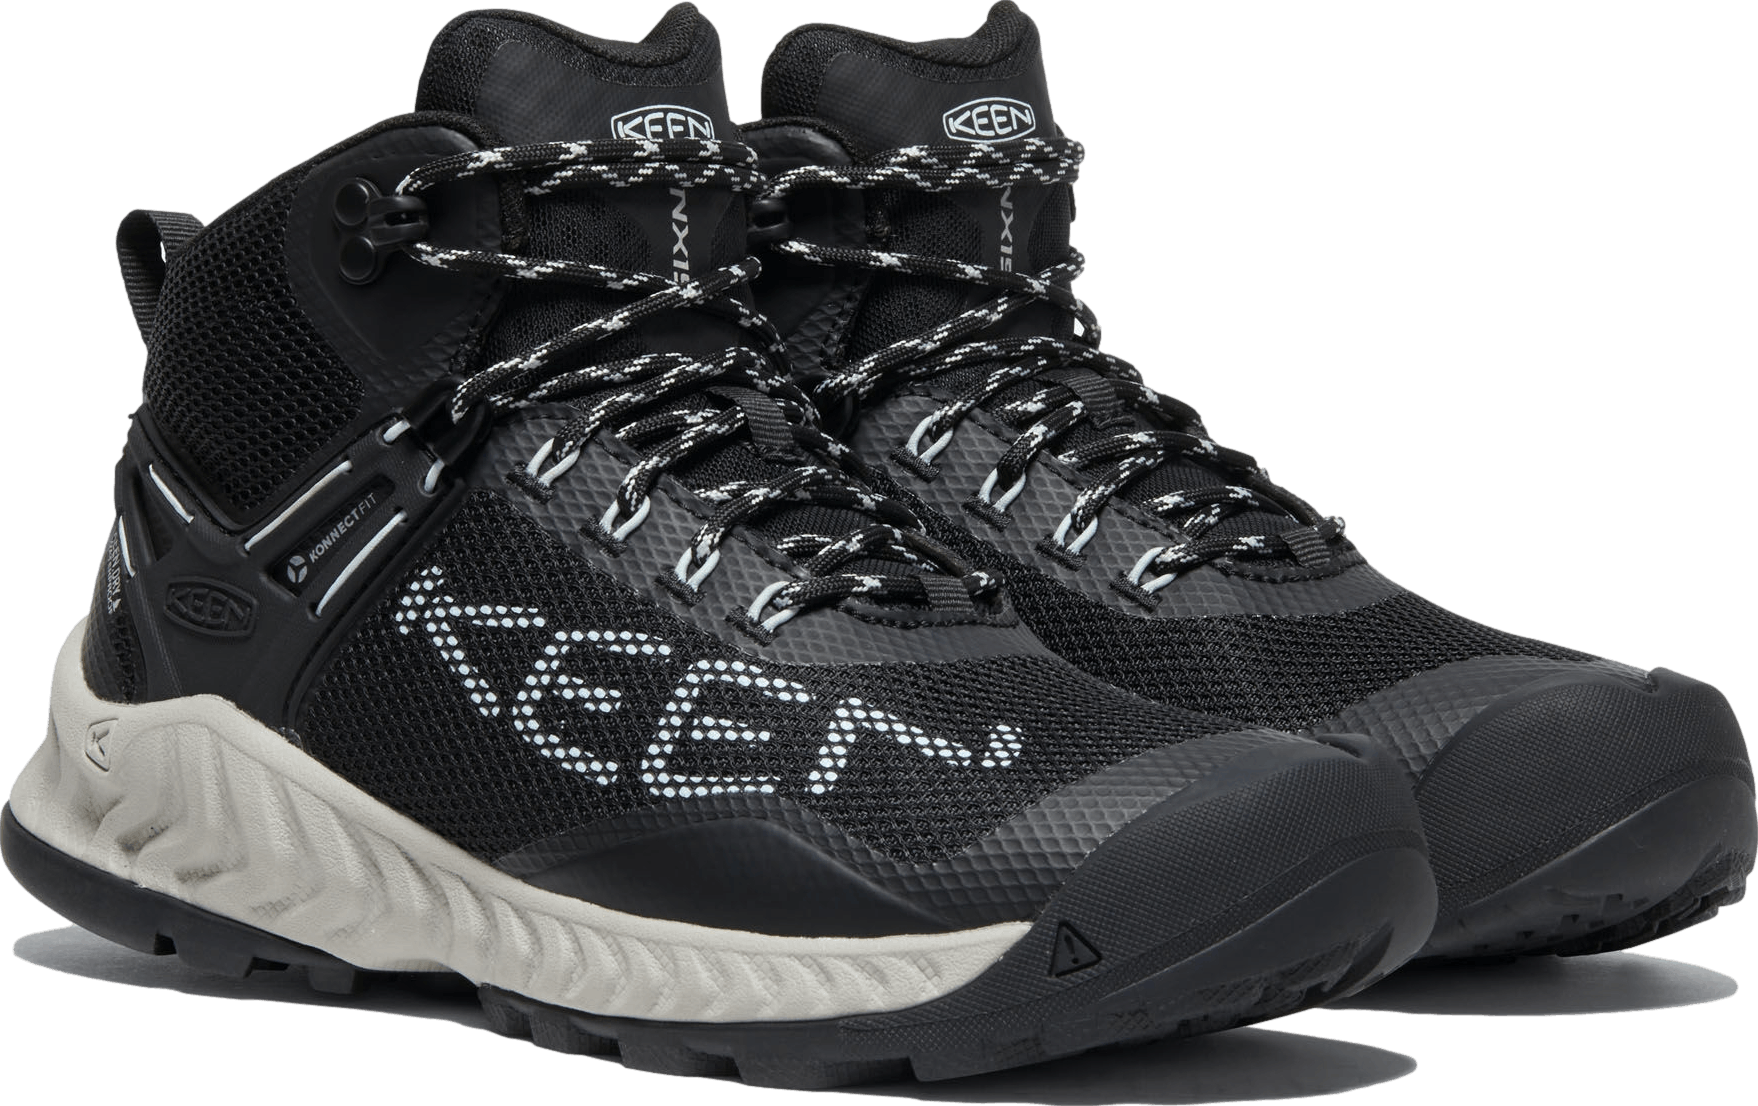 KEEN Women's NXIS EVO Waterproof Mid Hiking Boots